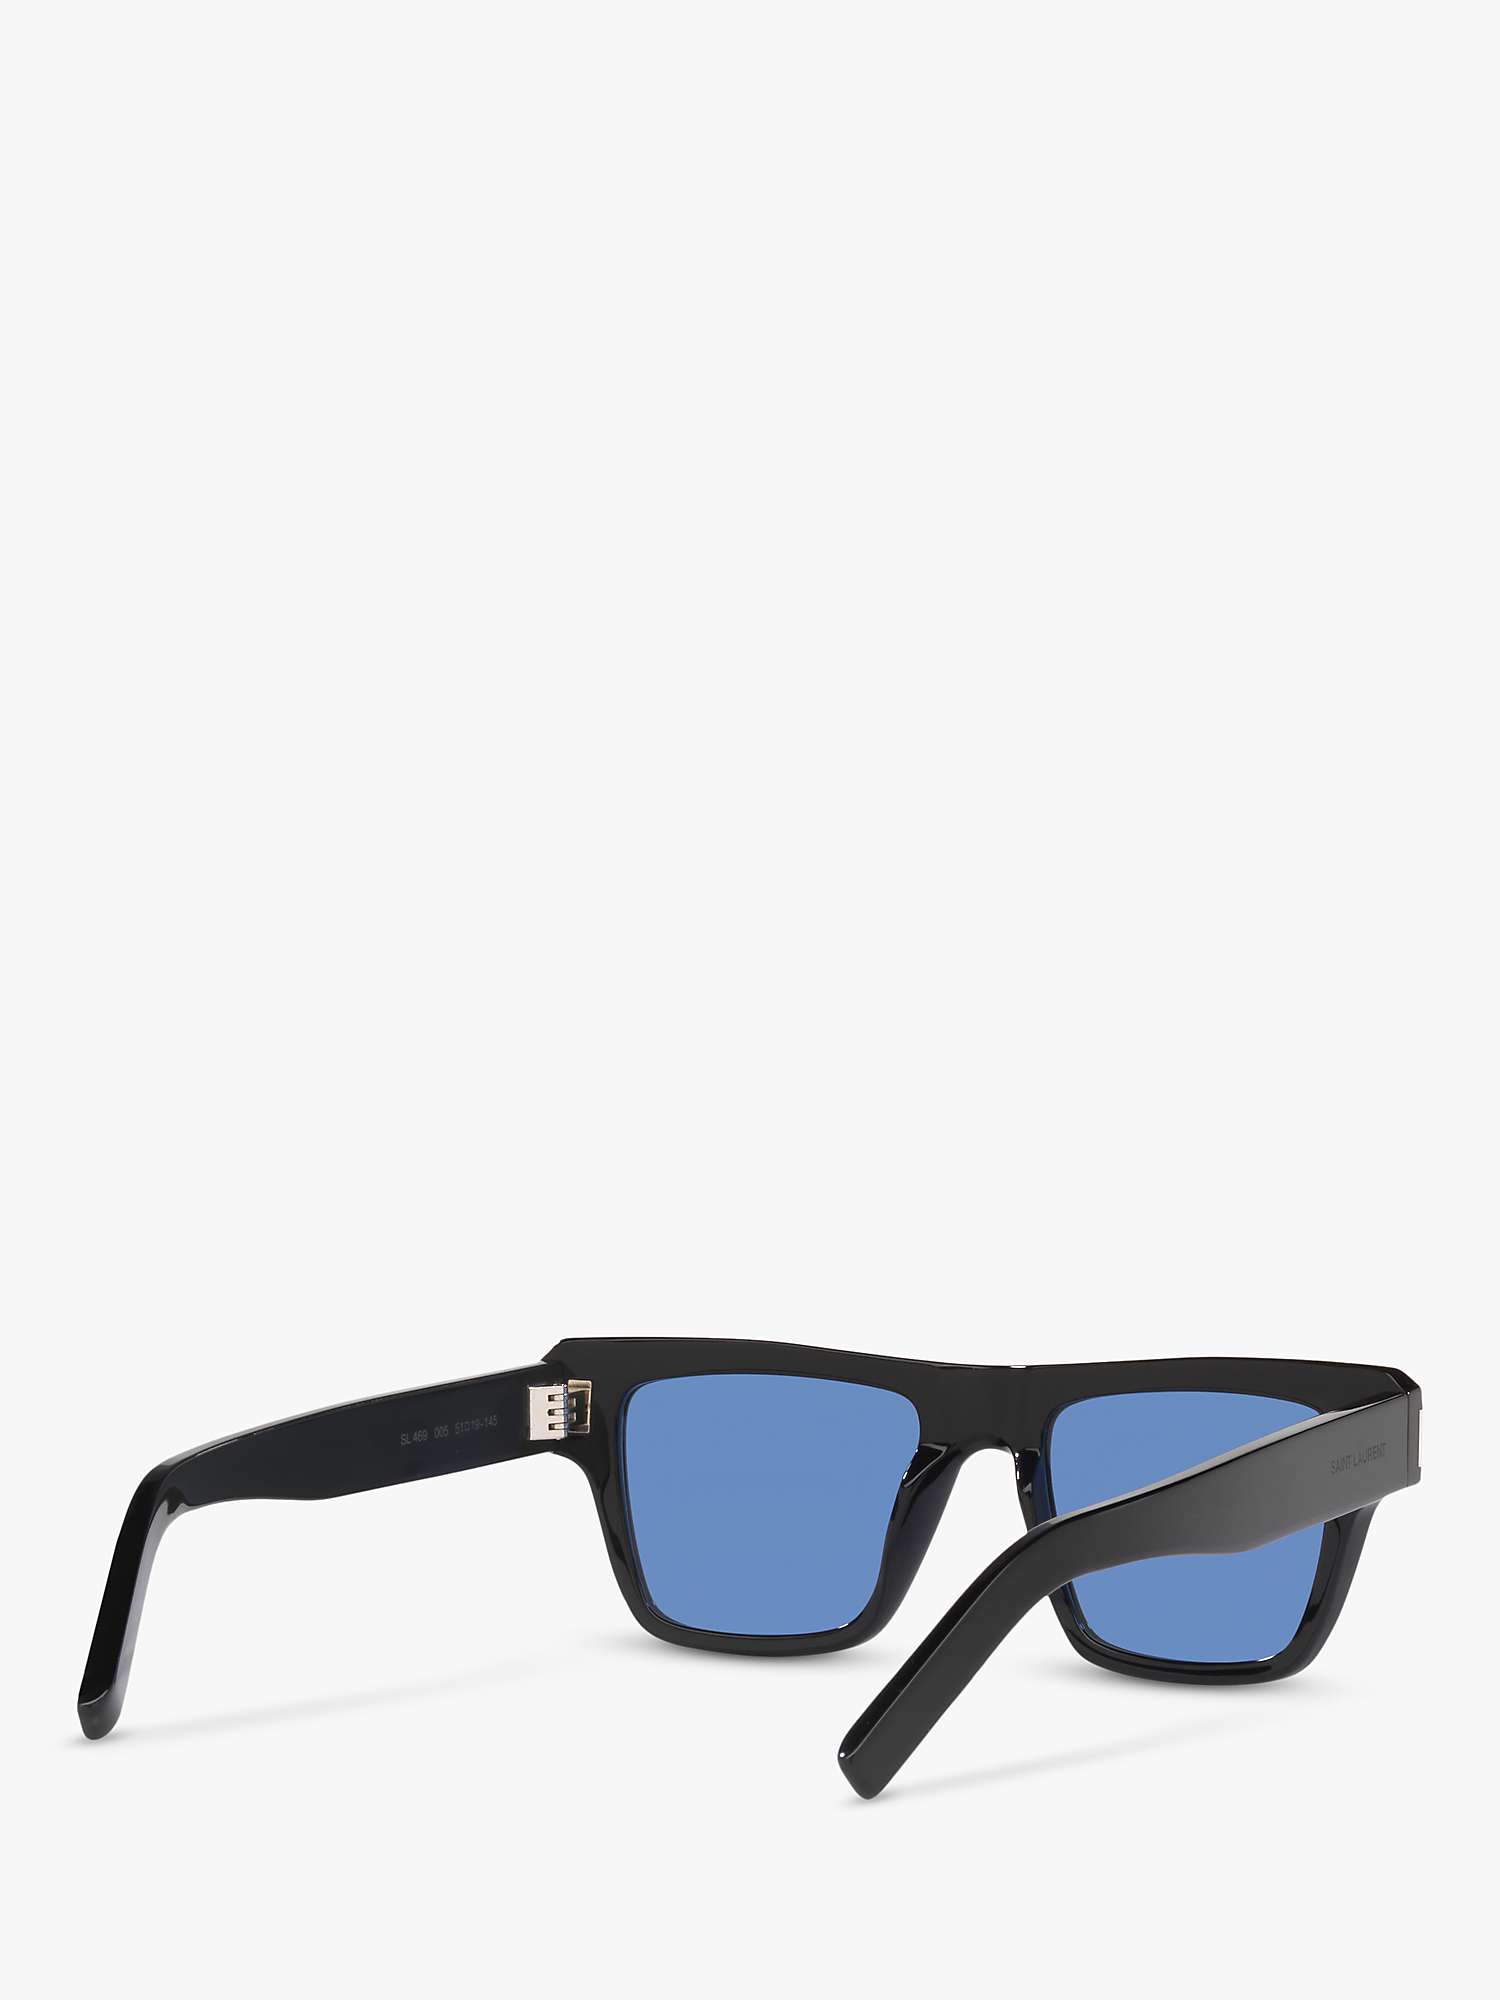 Buy Yves Saint Laurent SL 469 Unisex Rectangular Sunglasses, Shiny Black/Blue Online at johnlewis.com